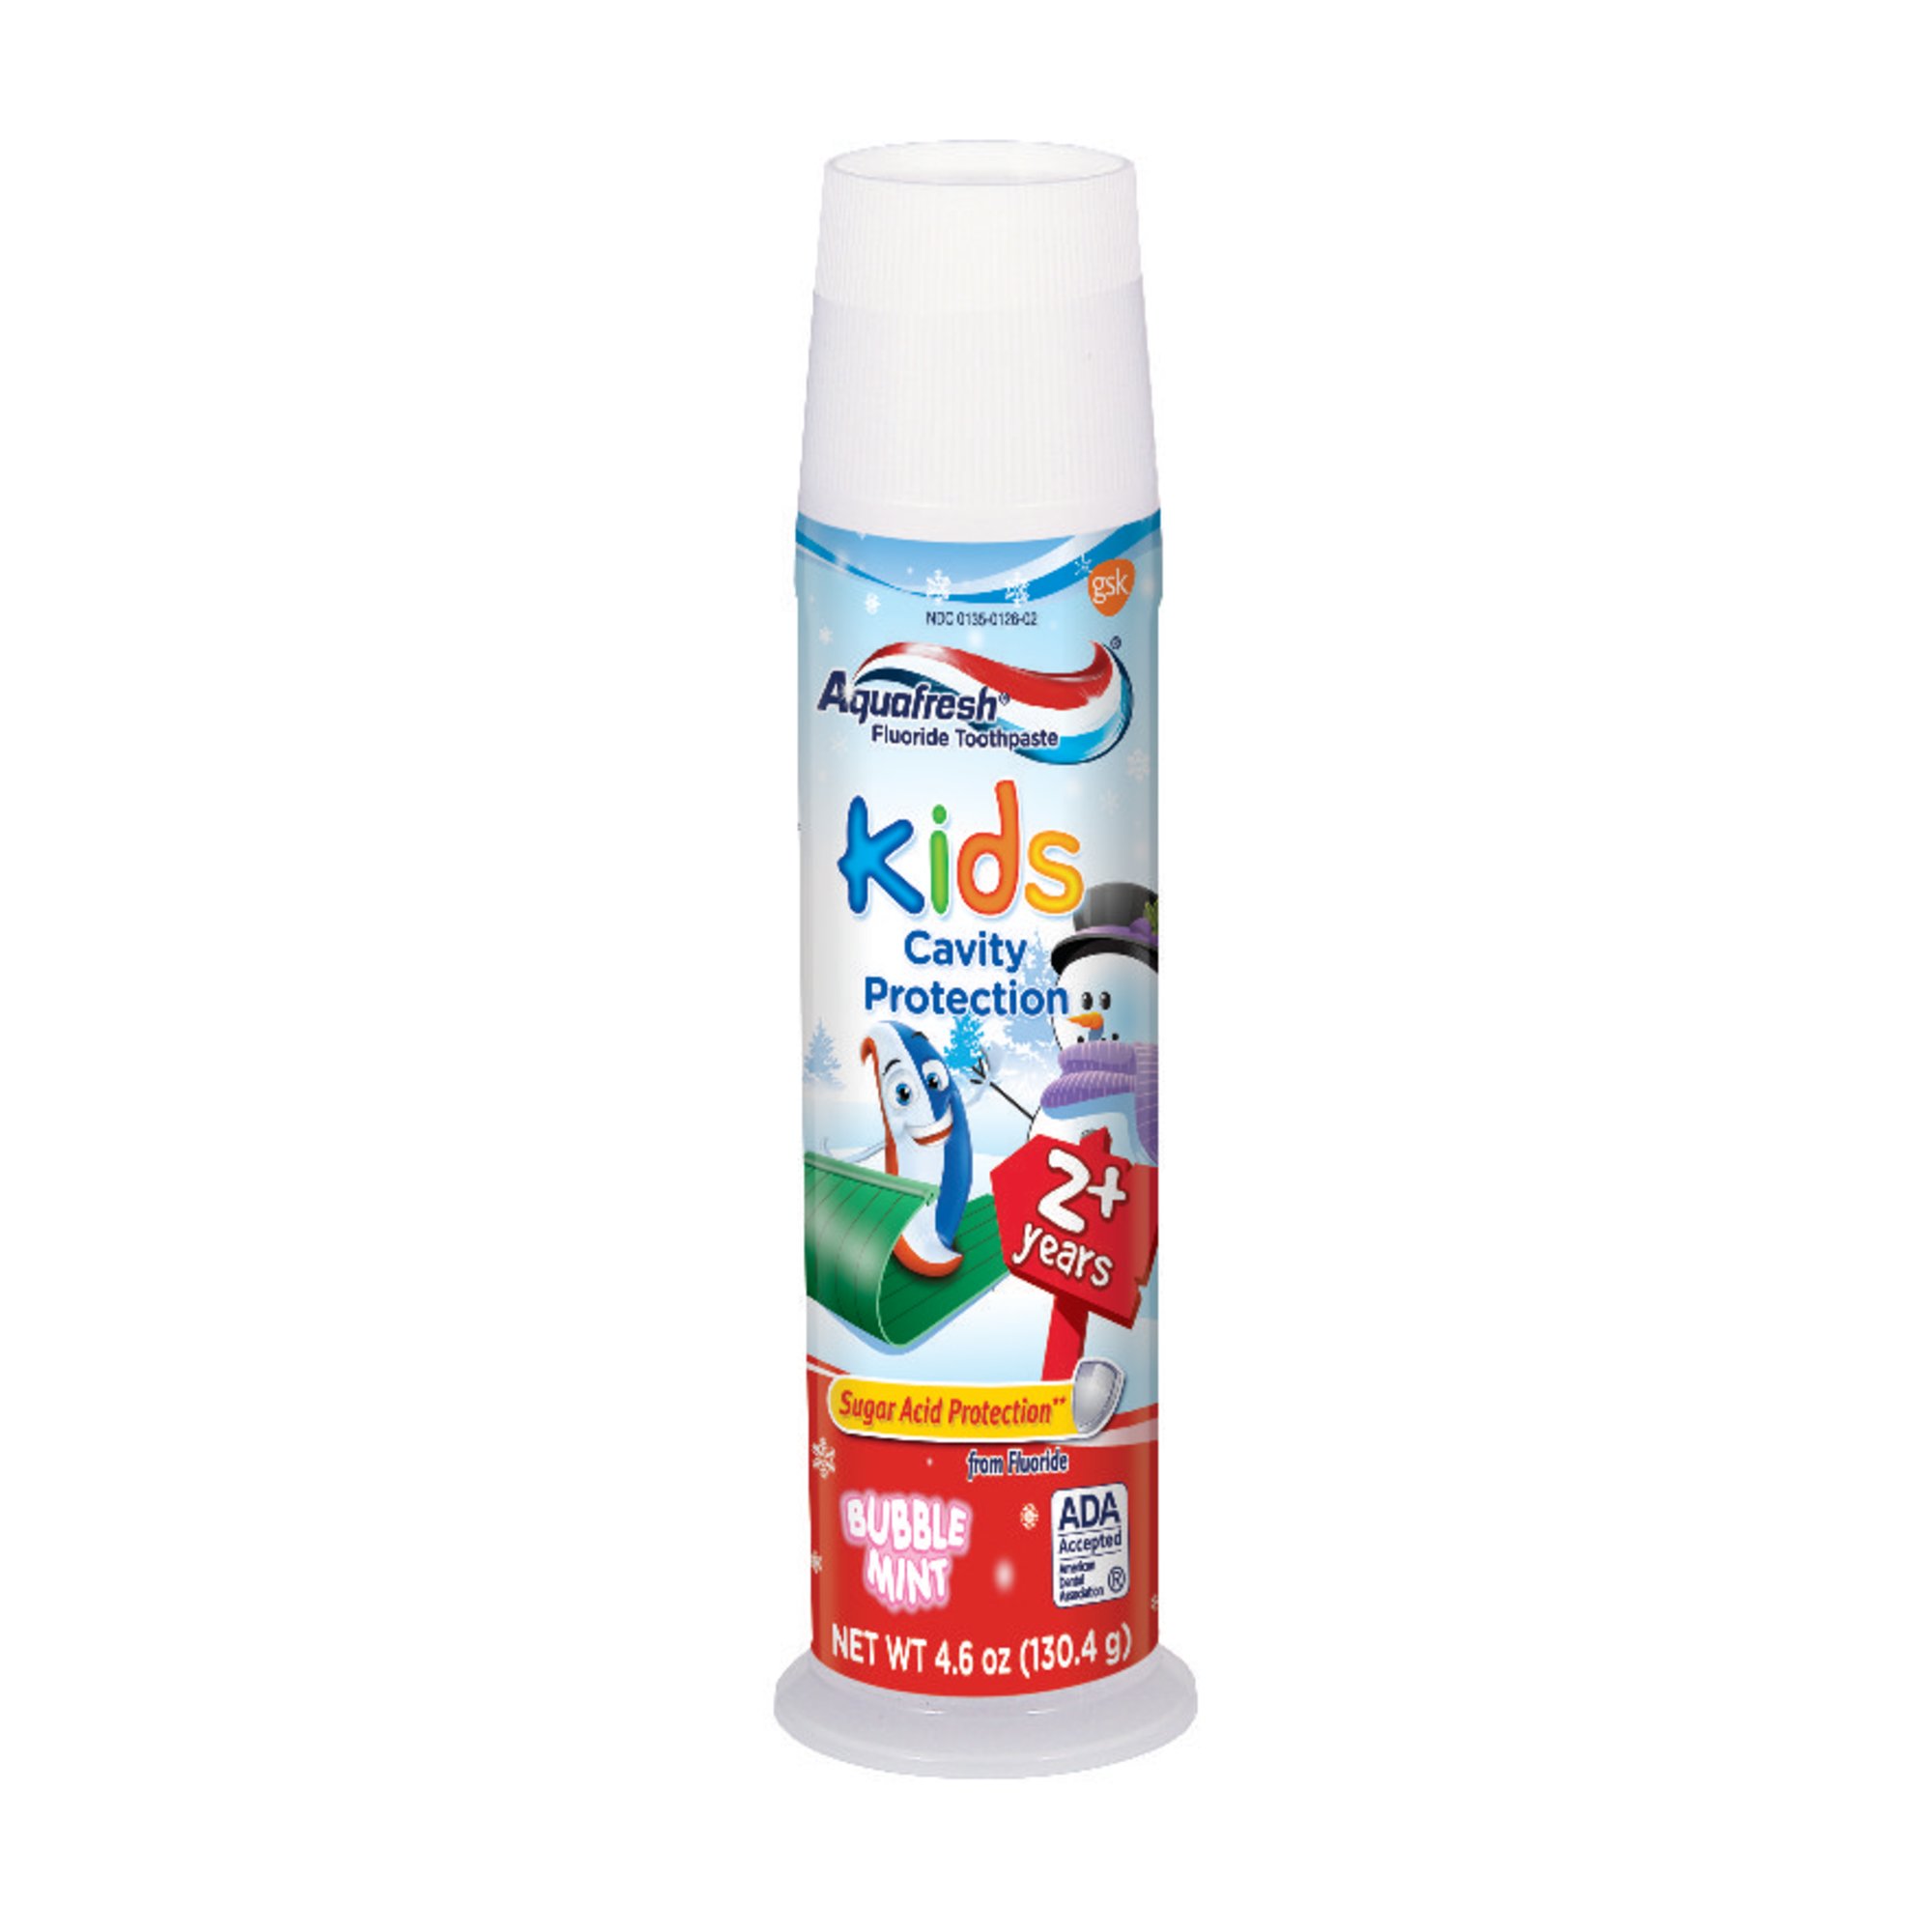 Aquafresh Kids Cavity Protection Fluoride Toothpaste Pump, Bubble Mint, 4.6 oz - image 1 of 8